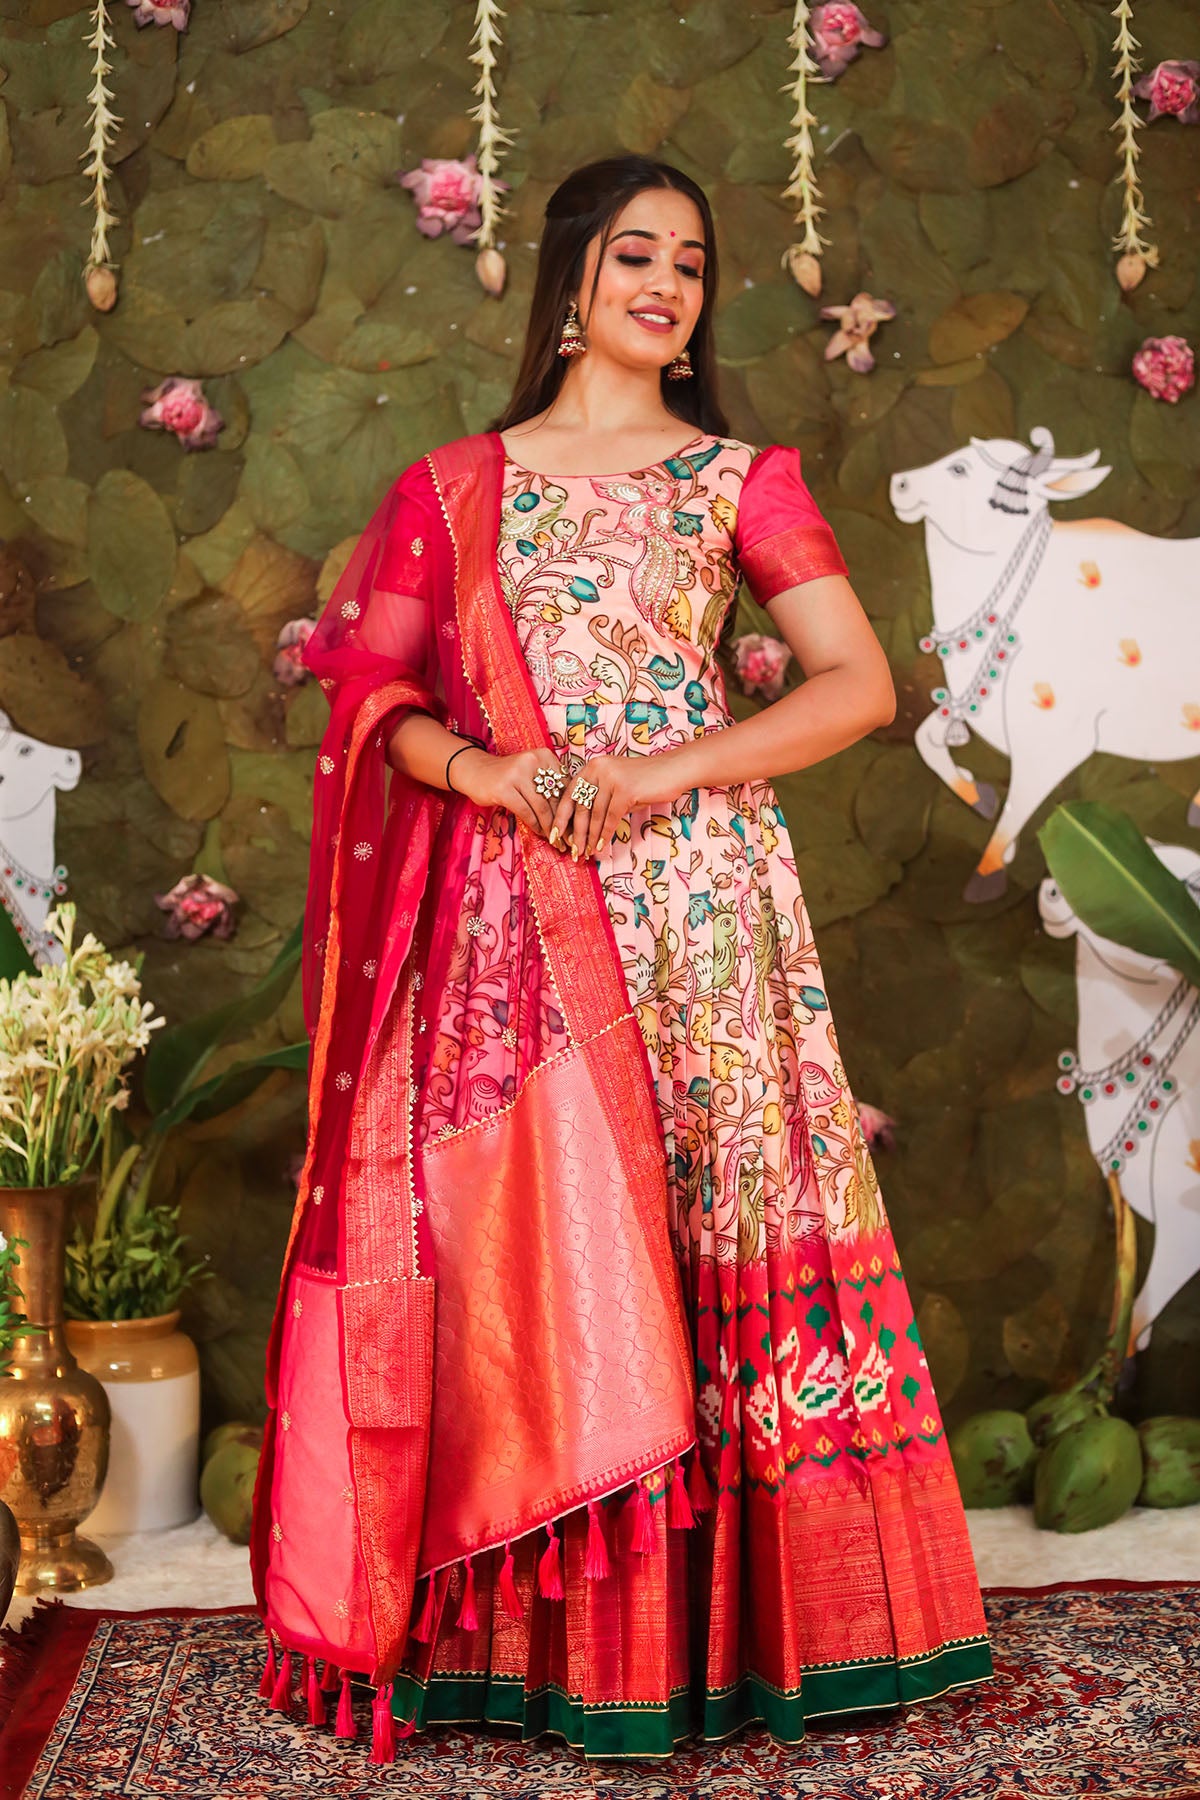 model in a pink Banarasi Dress from Bullionknot